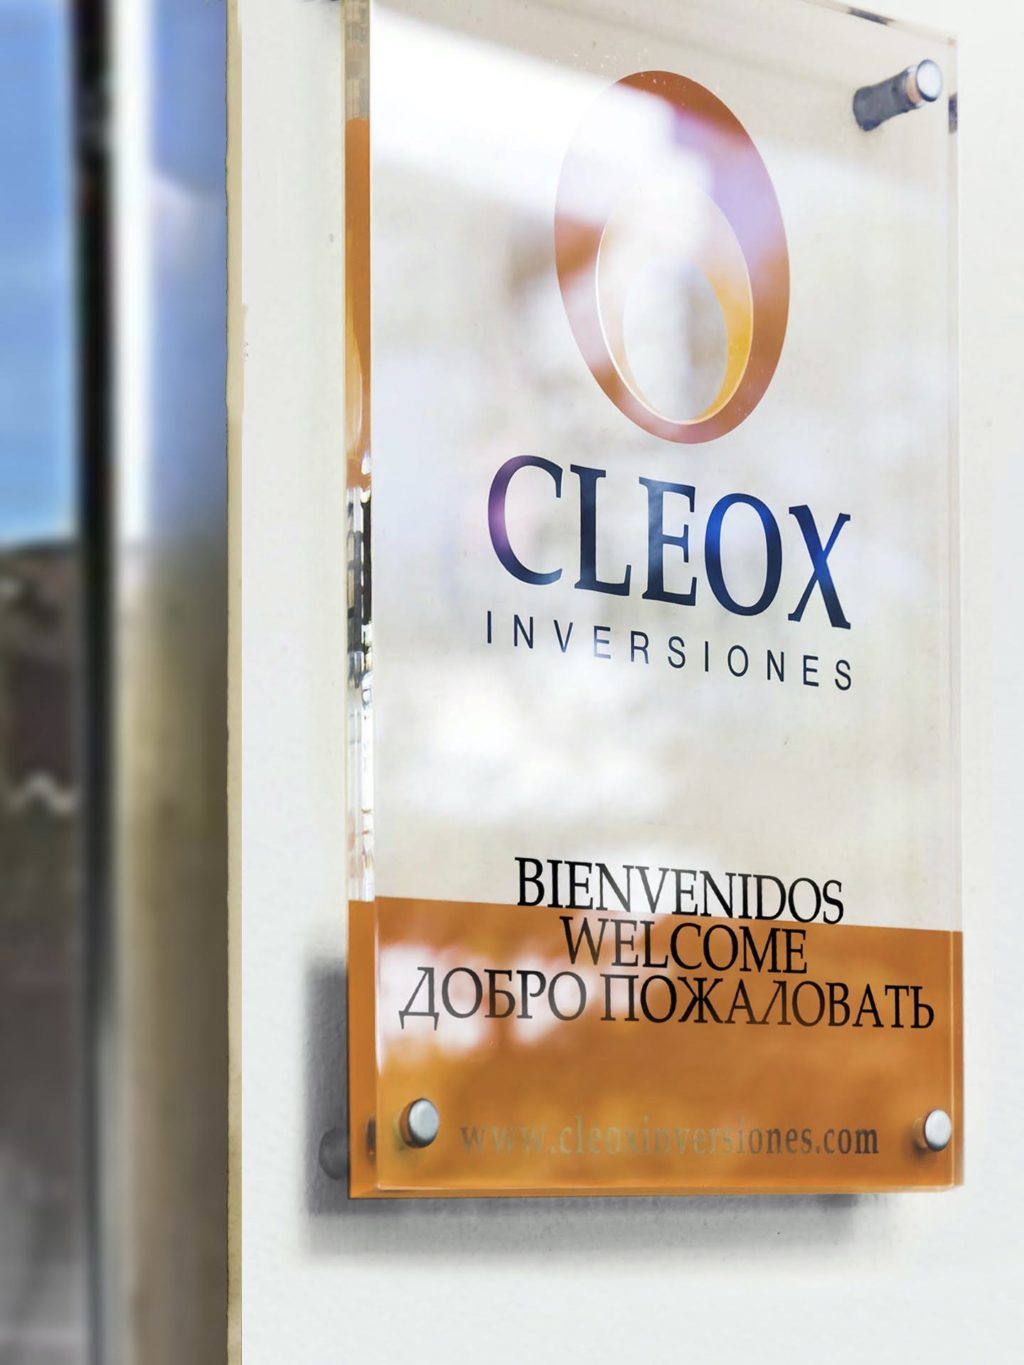 Cleox Inversiones Address